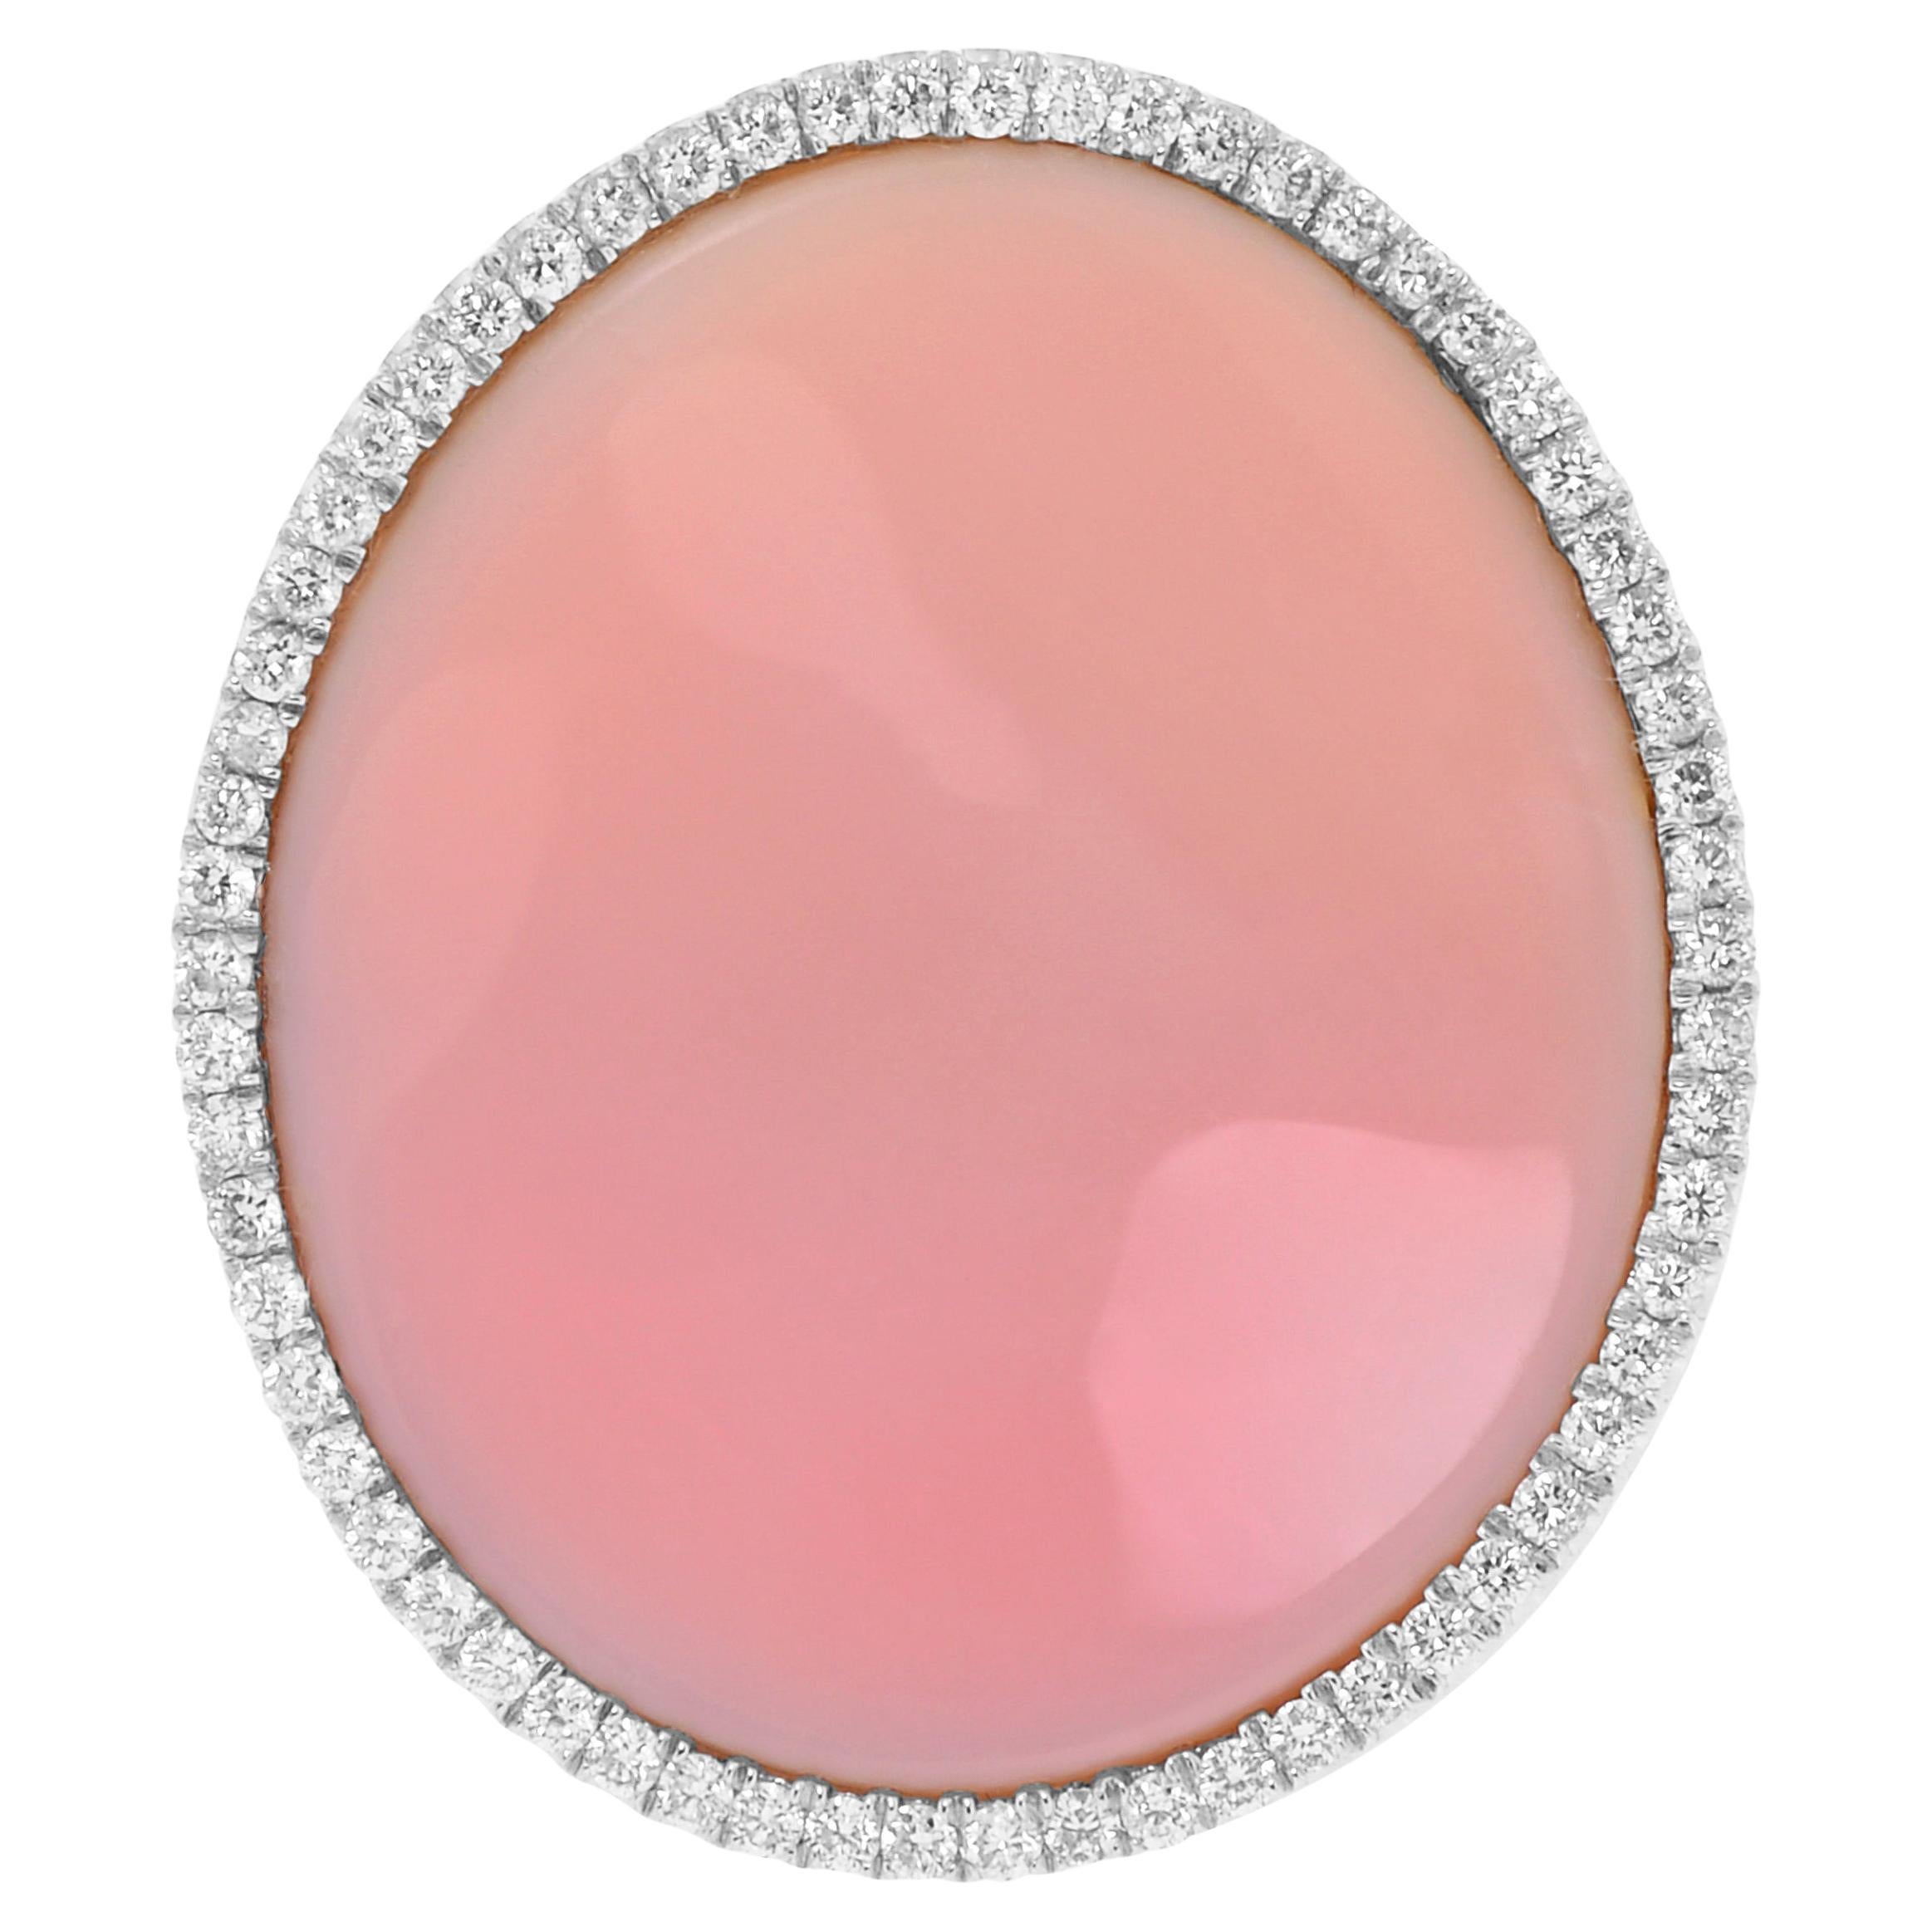 Mimi Milano Aurora 18K White Gold, MoPl, Diamond Statement Ring sz 6.25